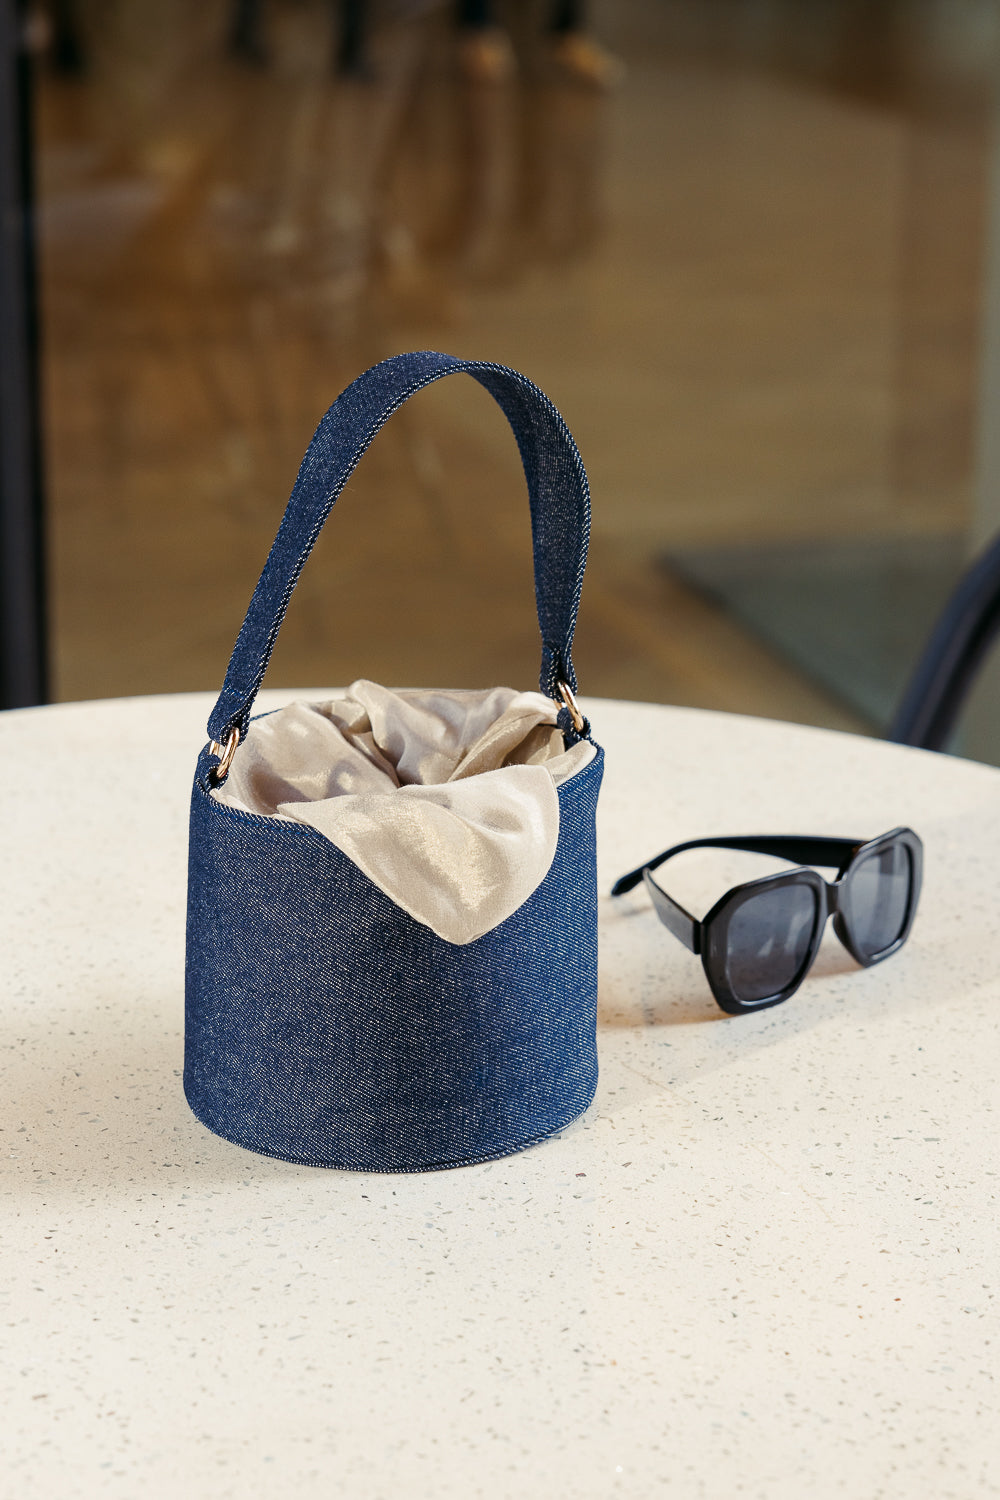 The Blue-Grey Bucket Bag